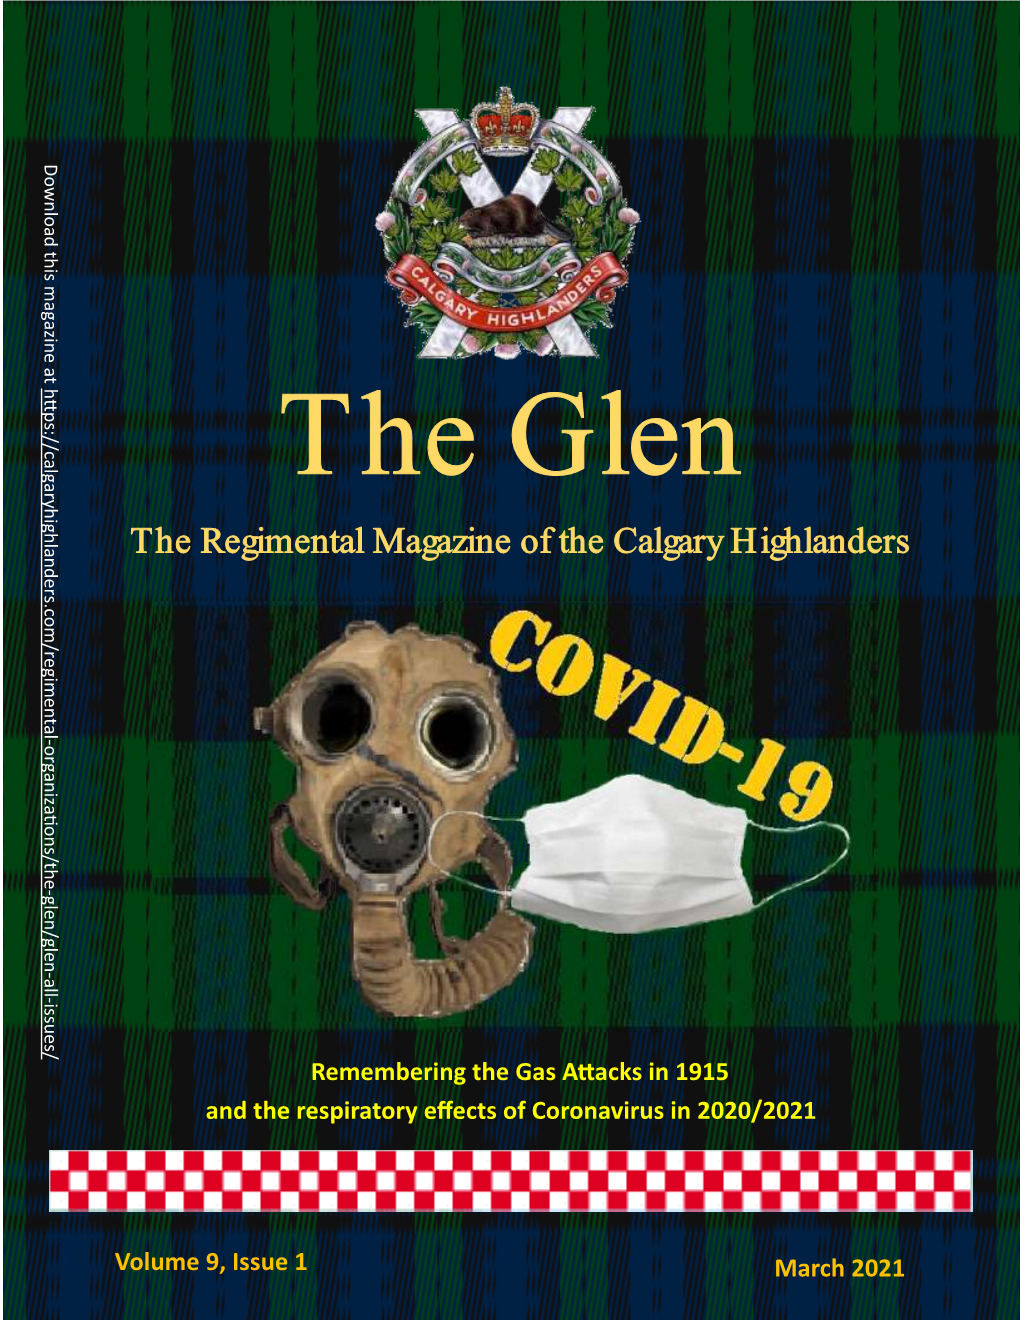 The Regimental Magazine of the Calgary Highlanders